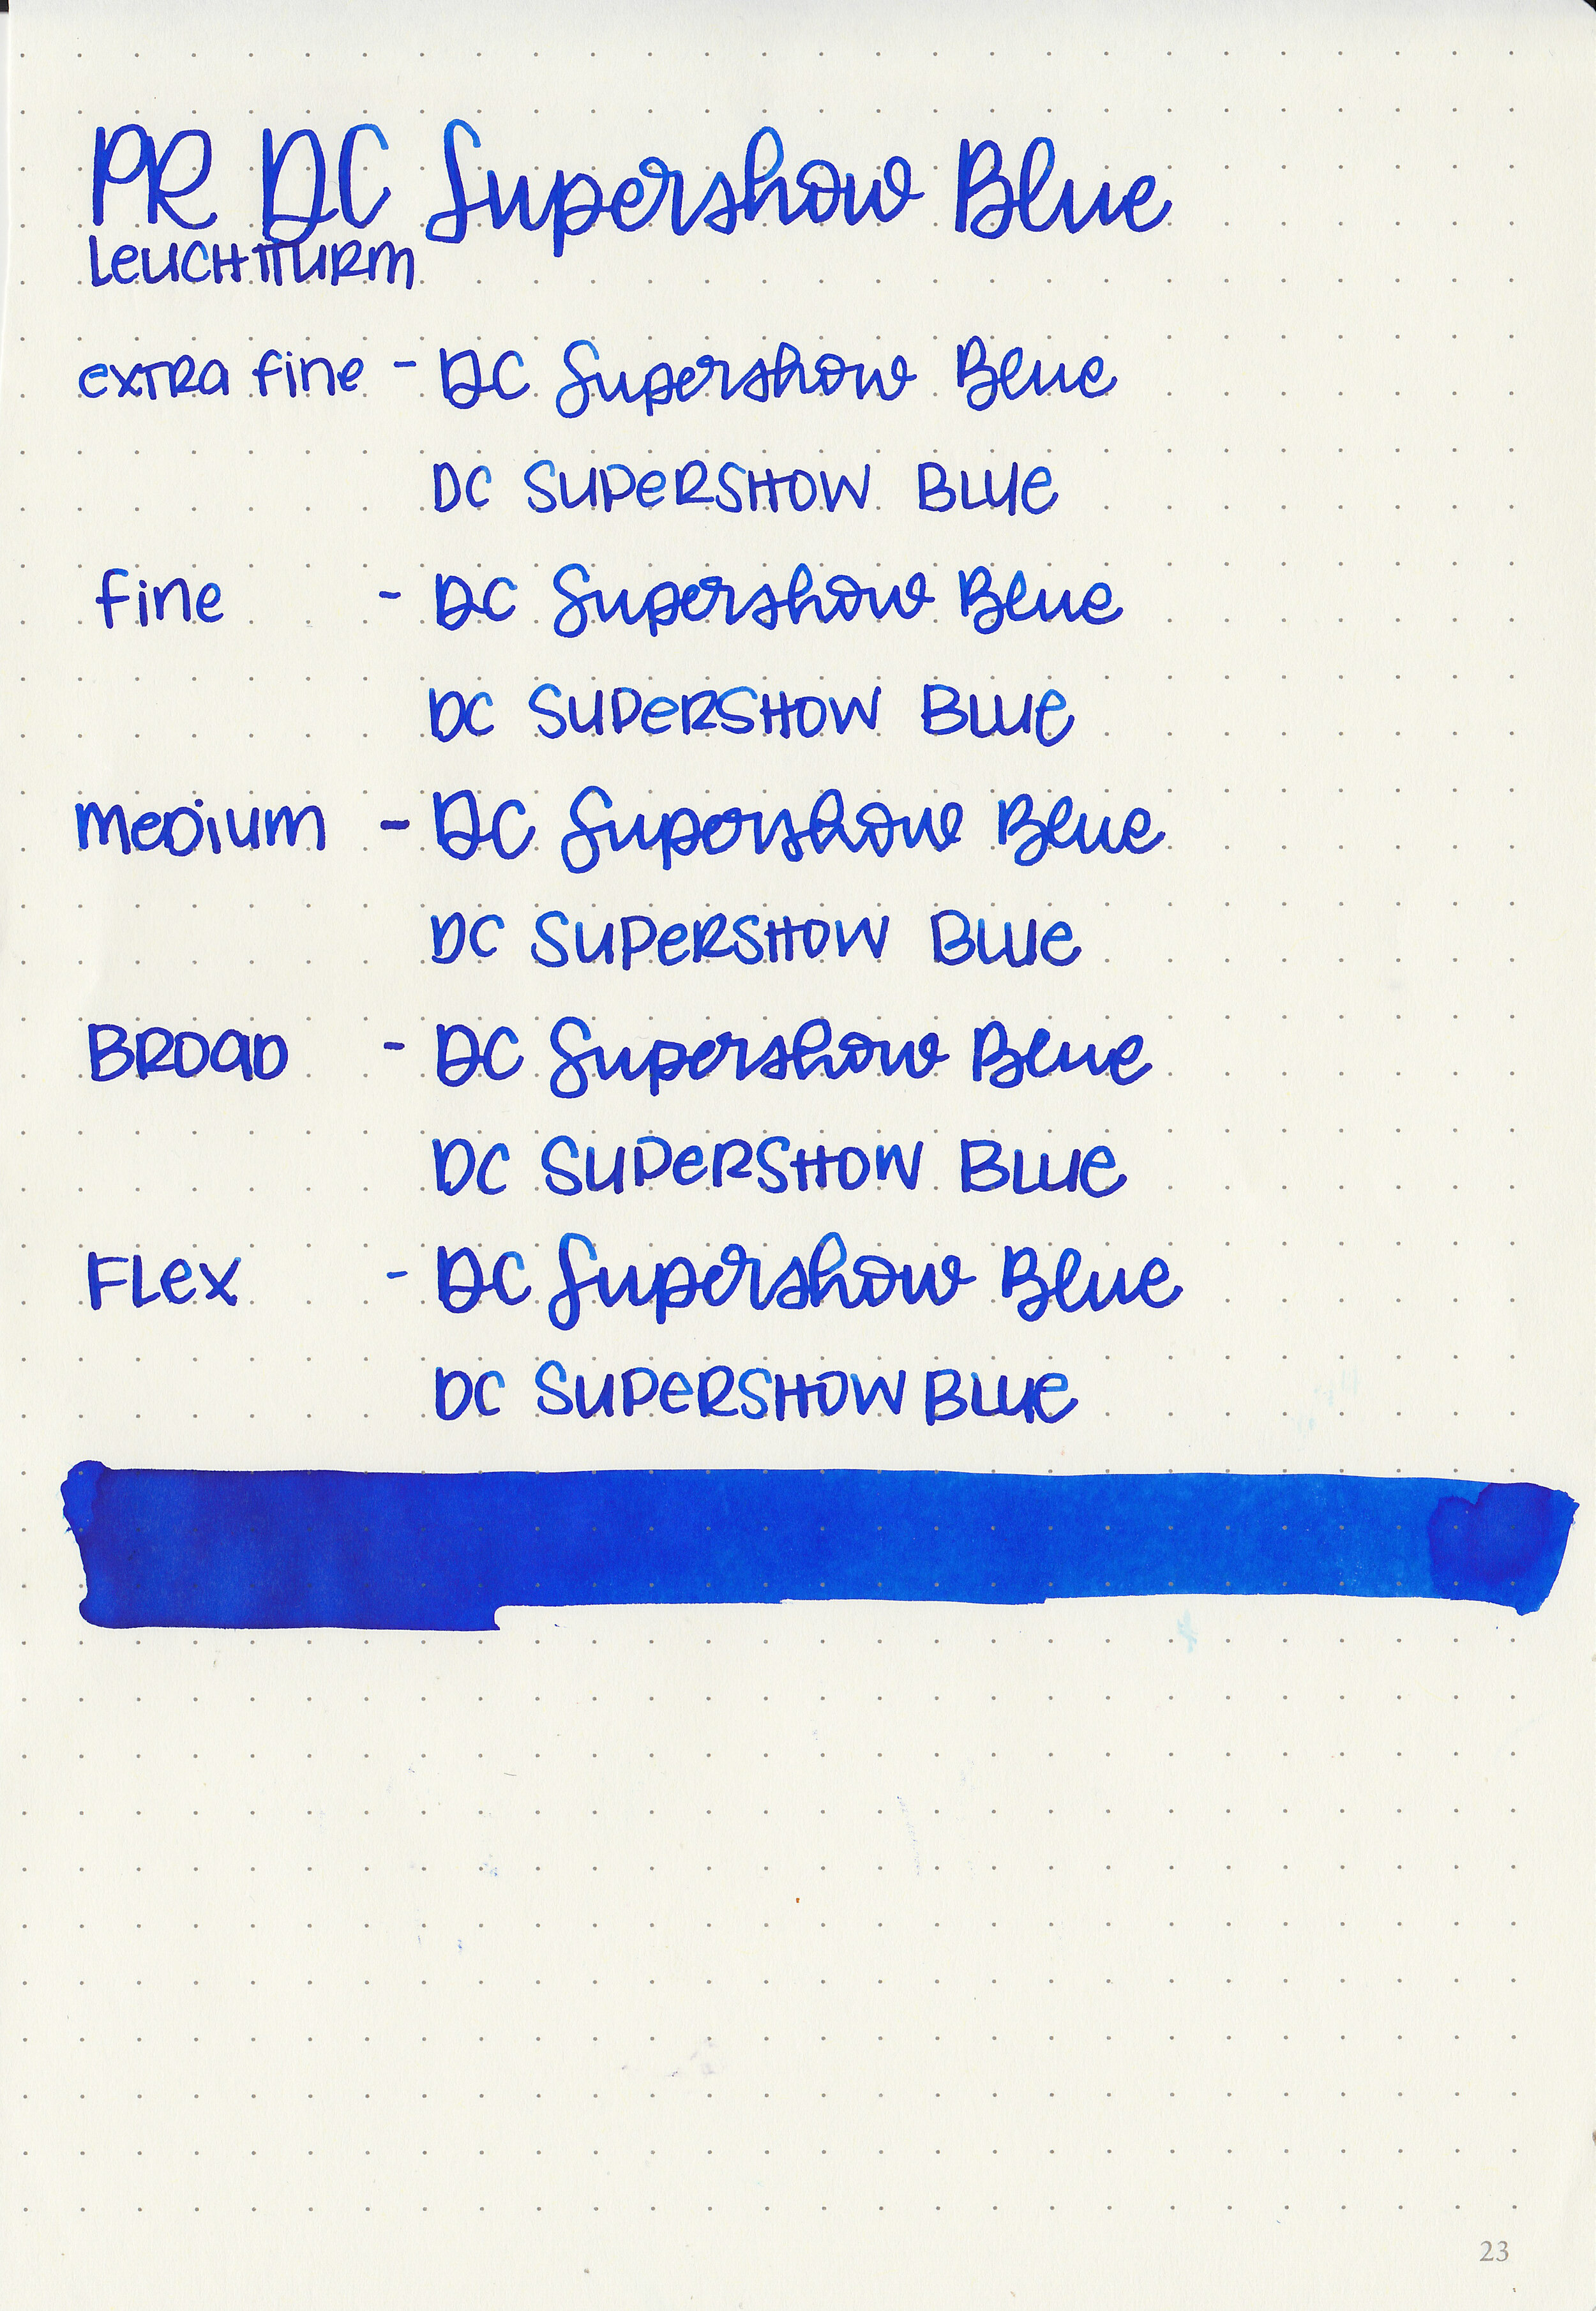 pr-dc-supershow-blue-9.jpg